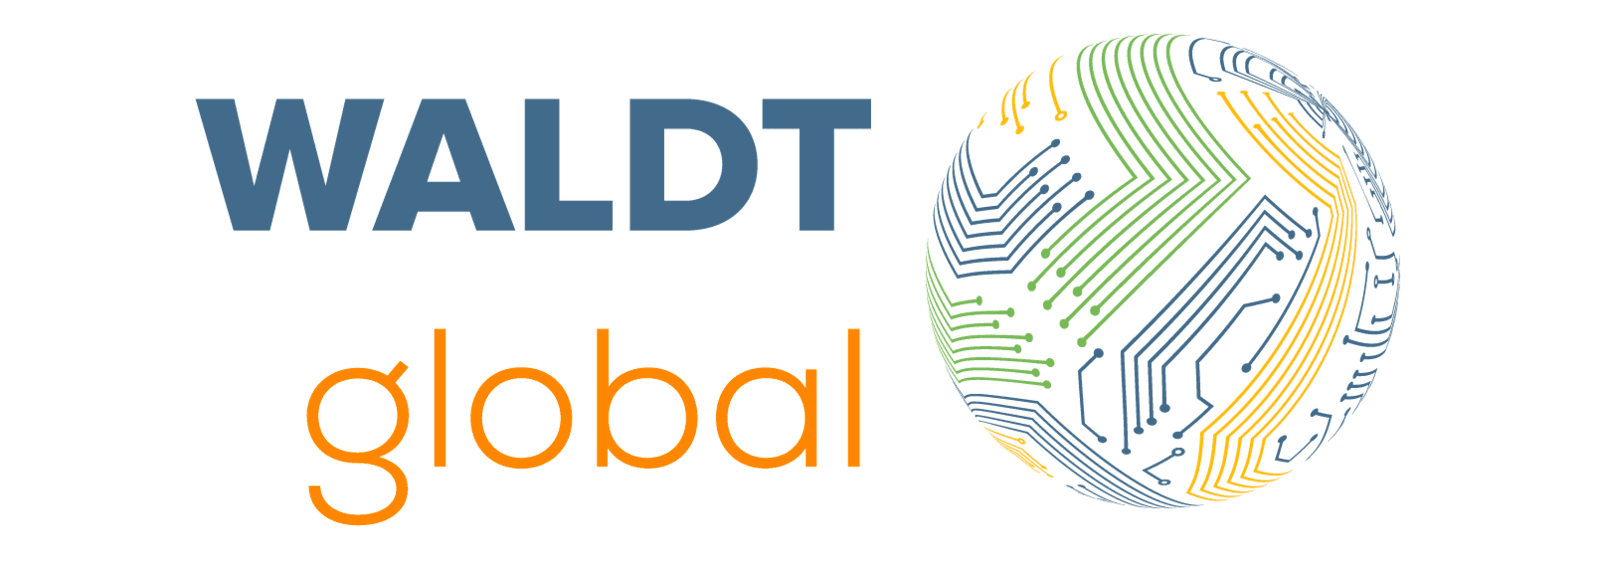 WALDT Global